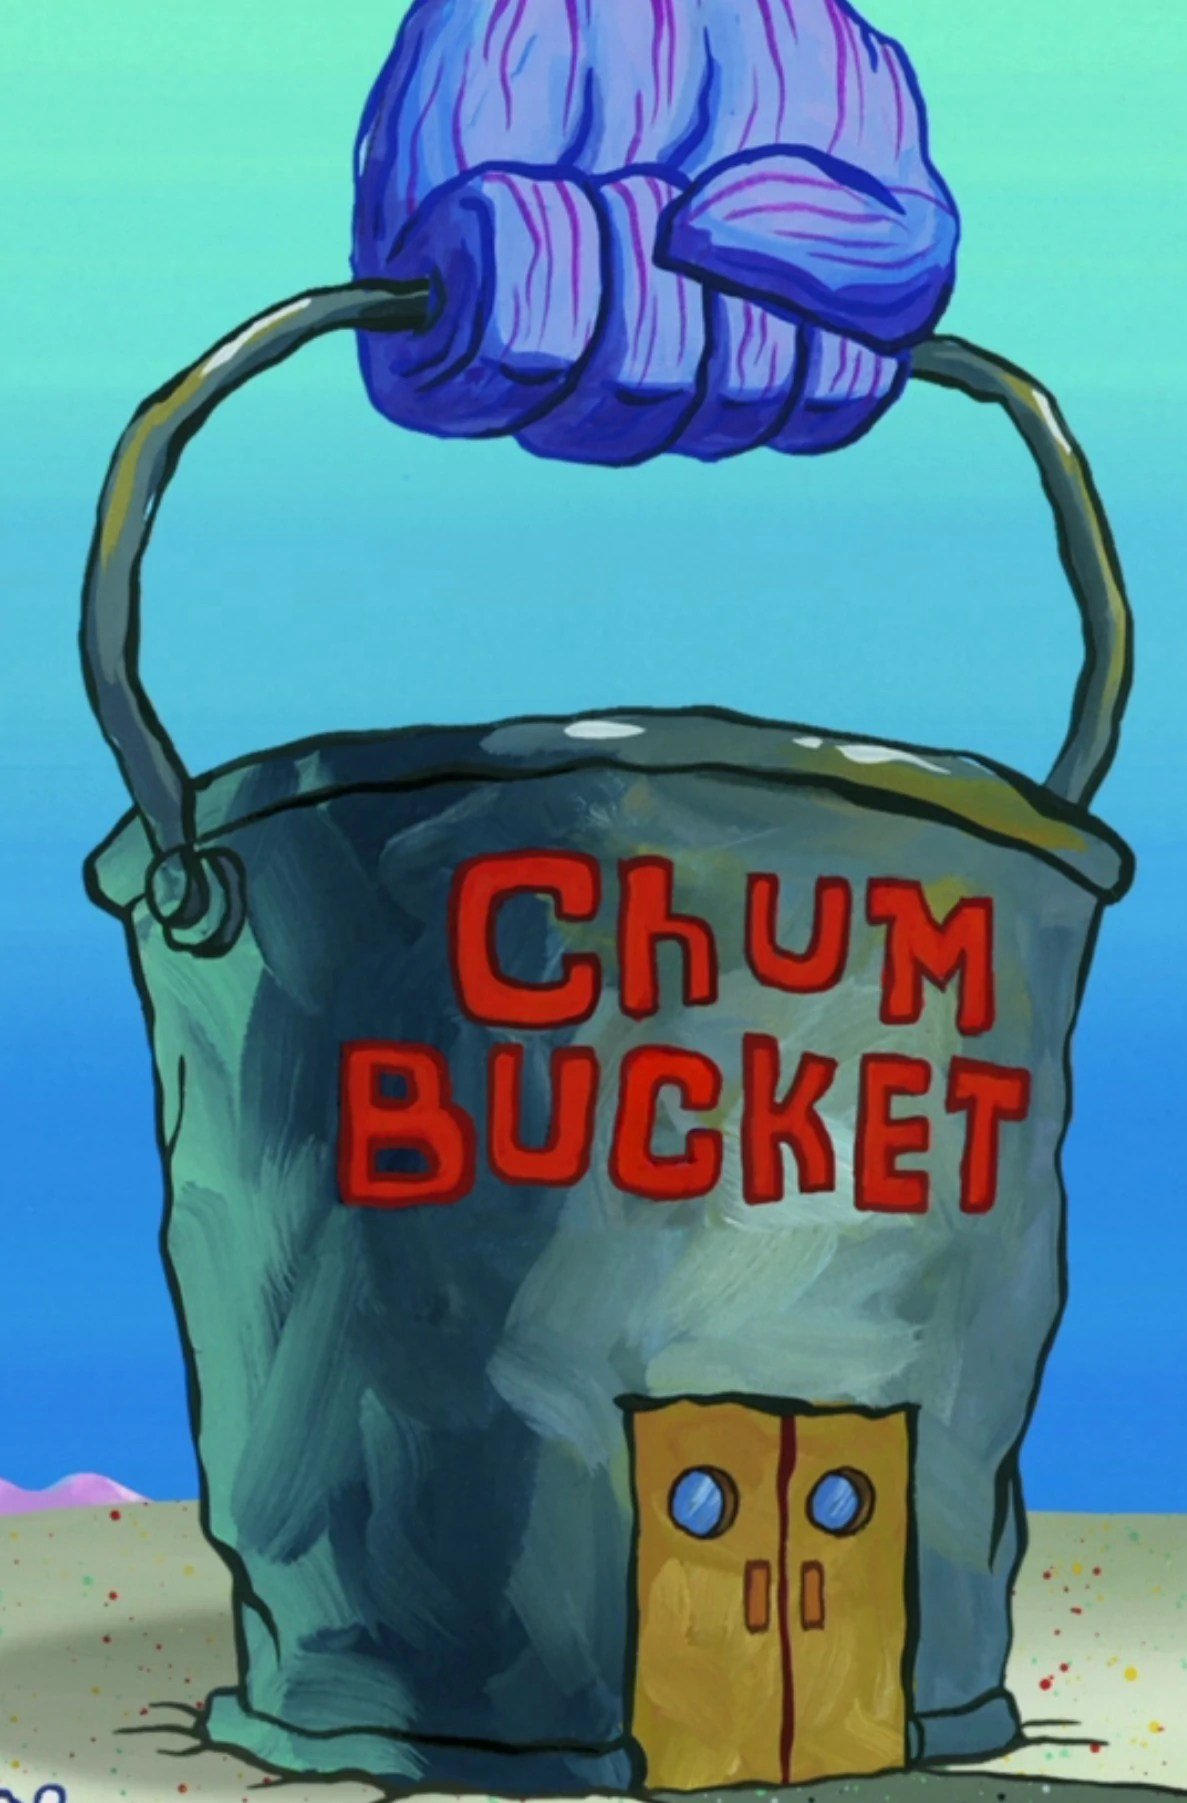 Chum bucket sign